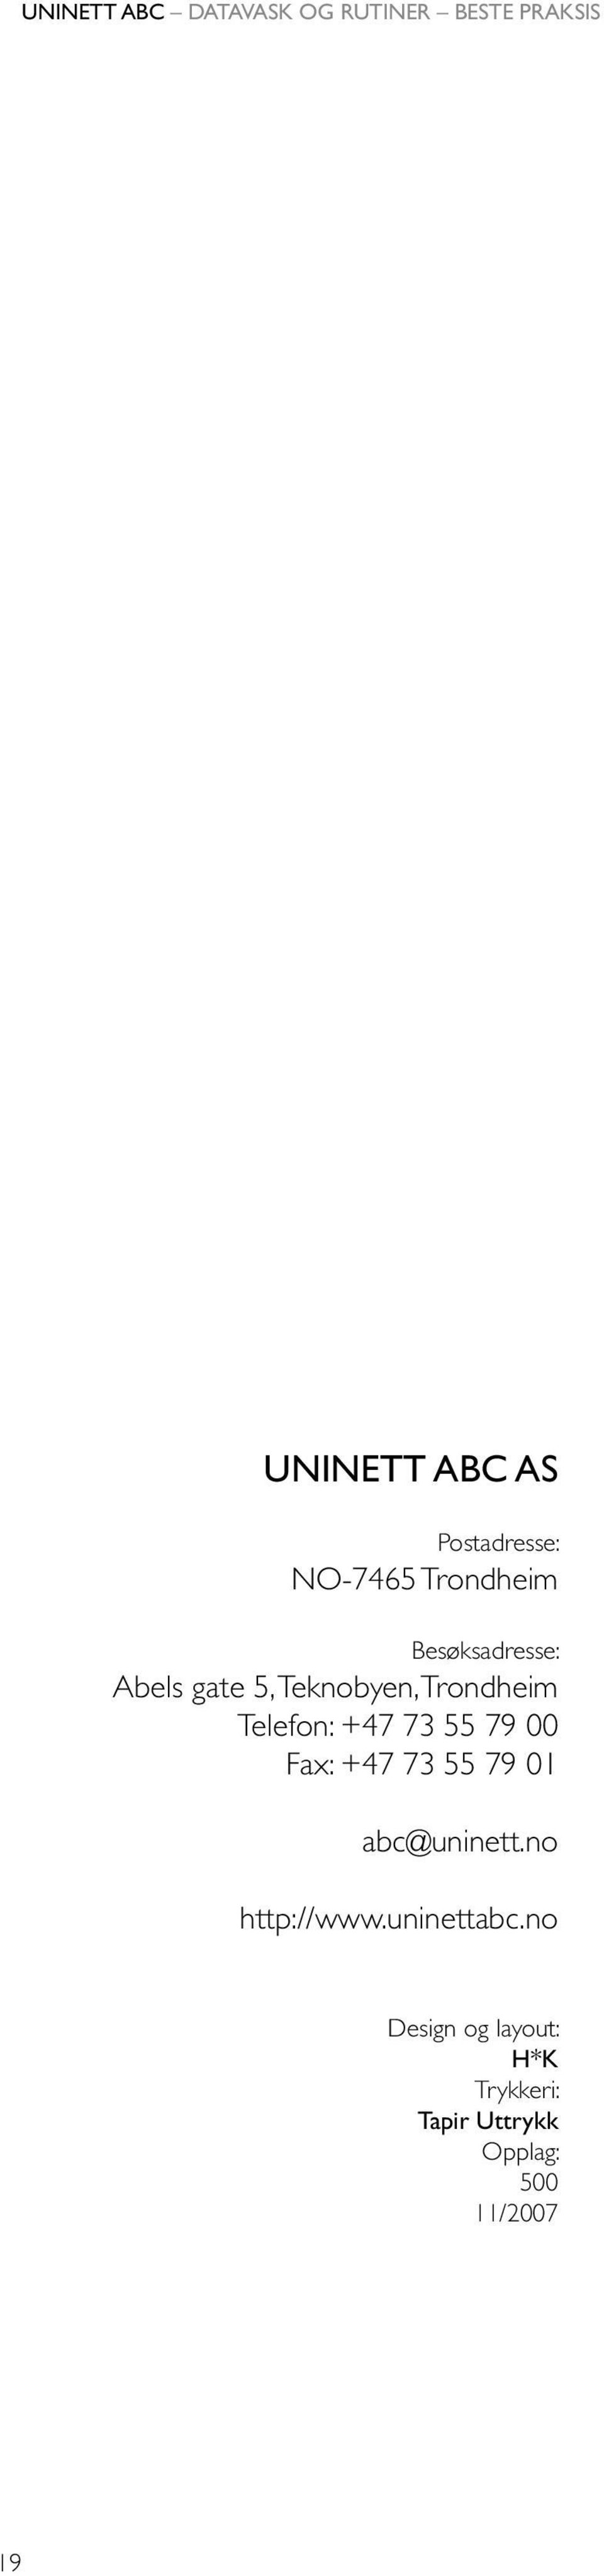 Fax: +47 73 55 79 01 abc@uninett.no http://www.uninettabc.